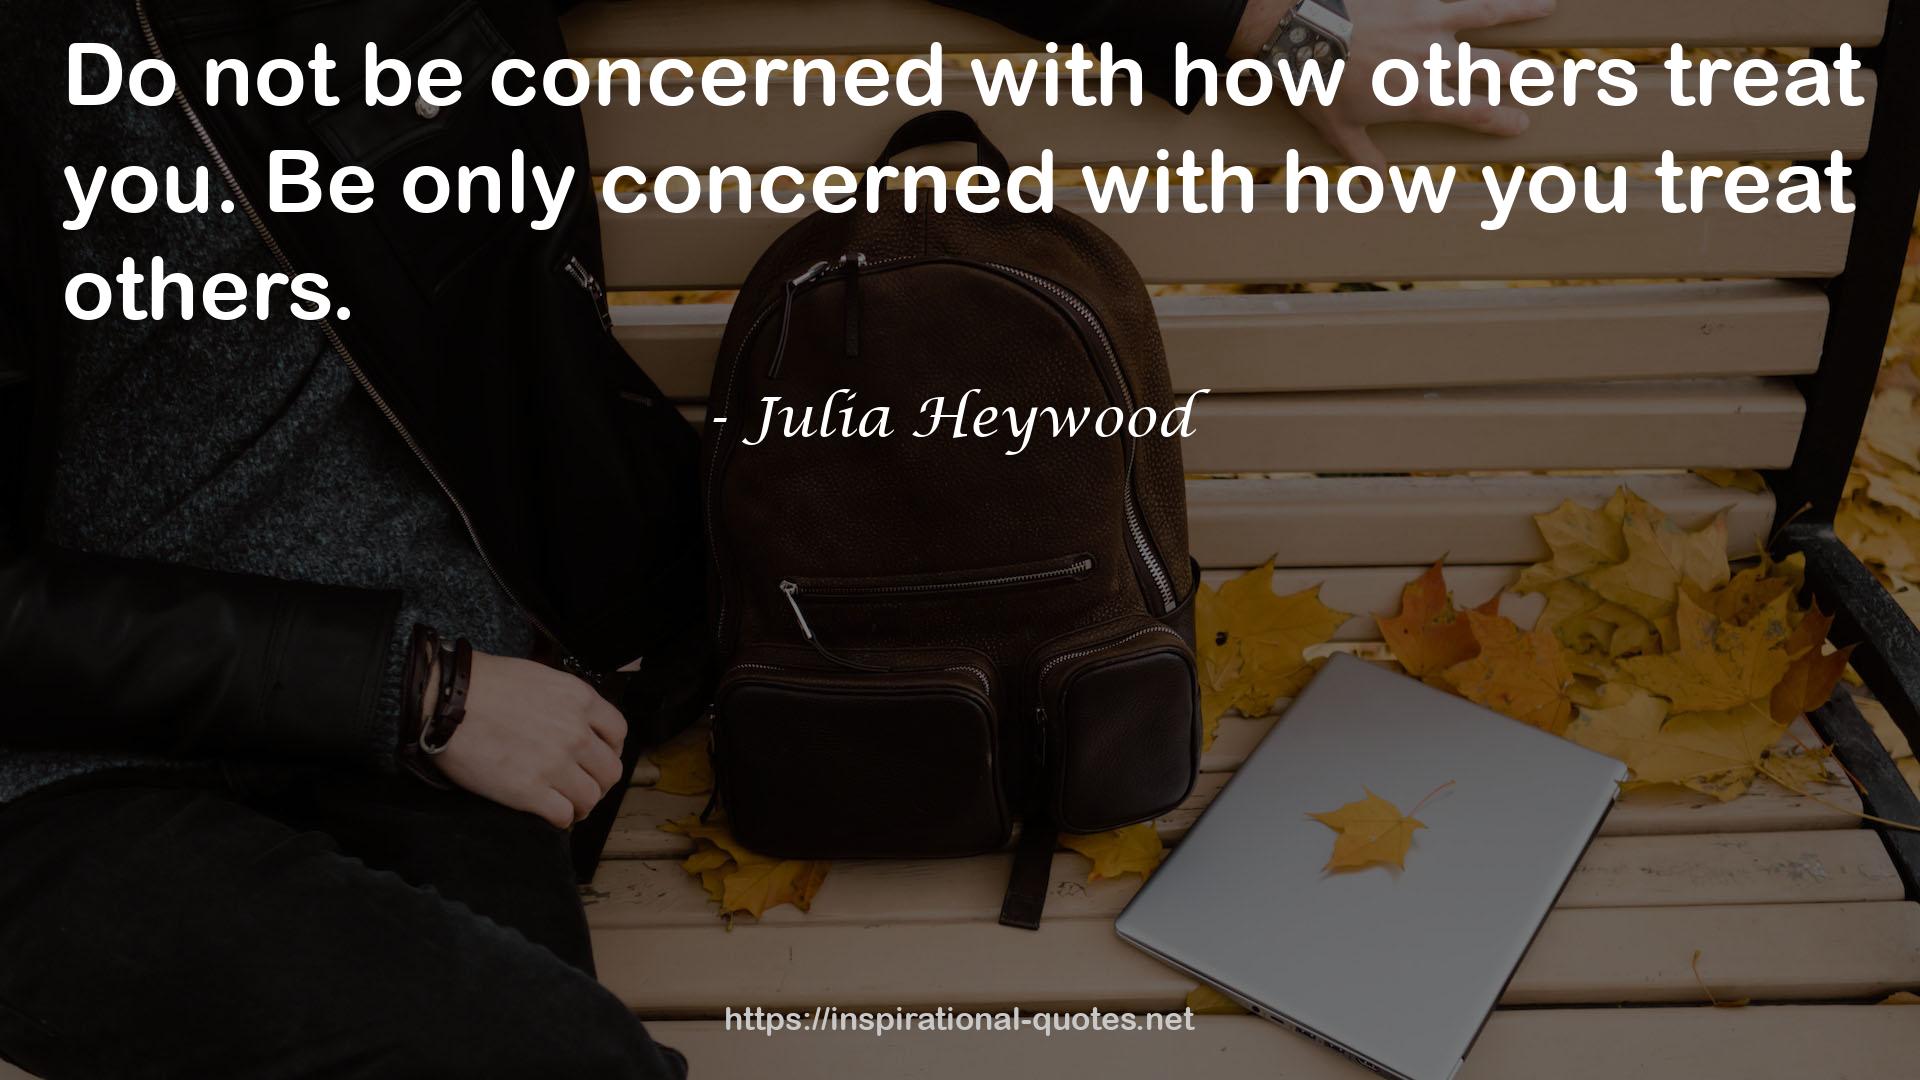 Julia Heywood QUOTES